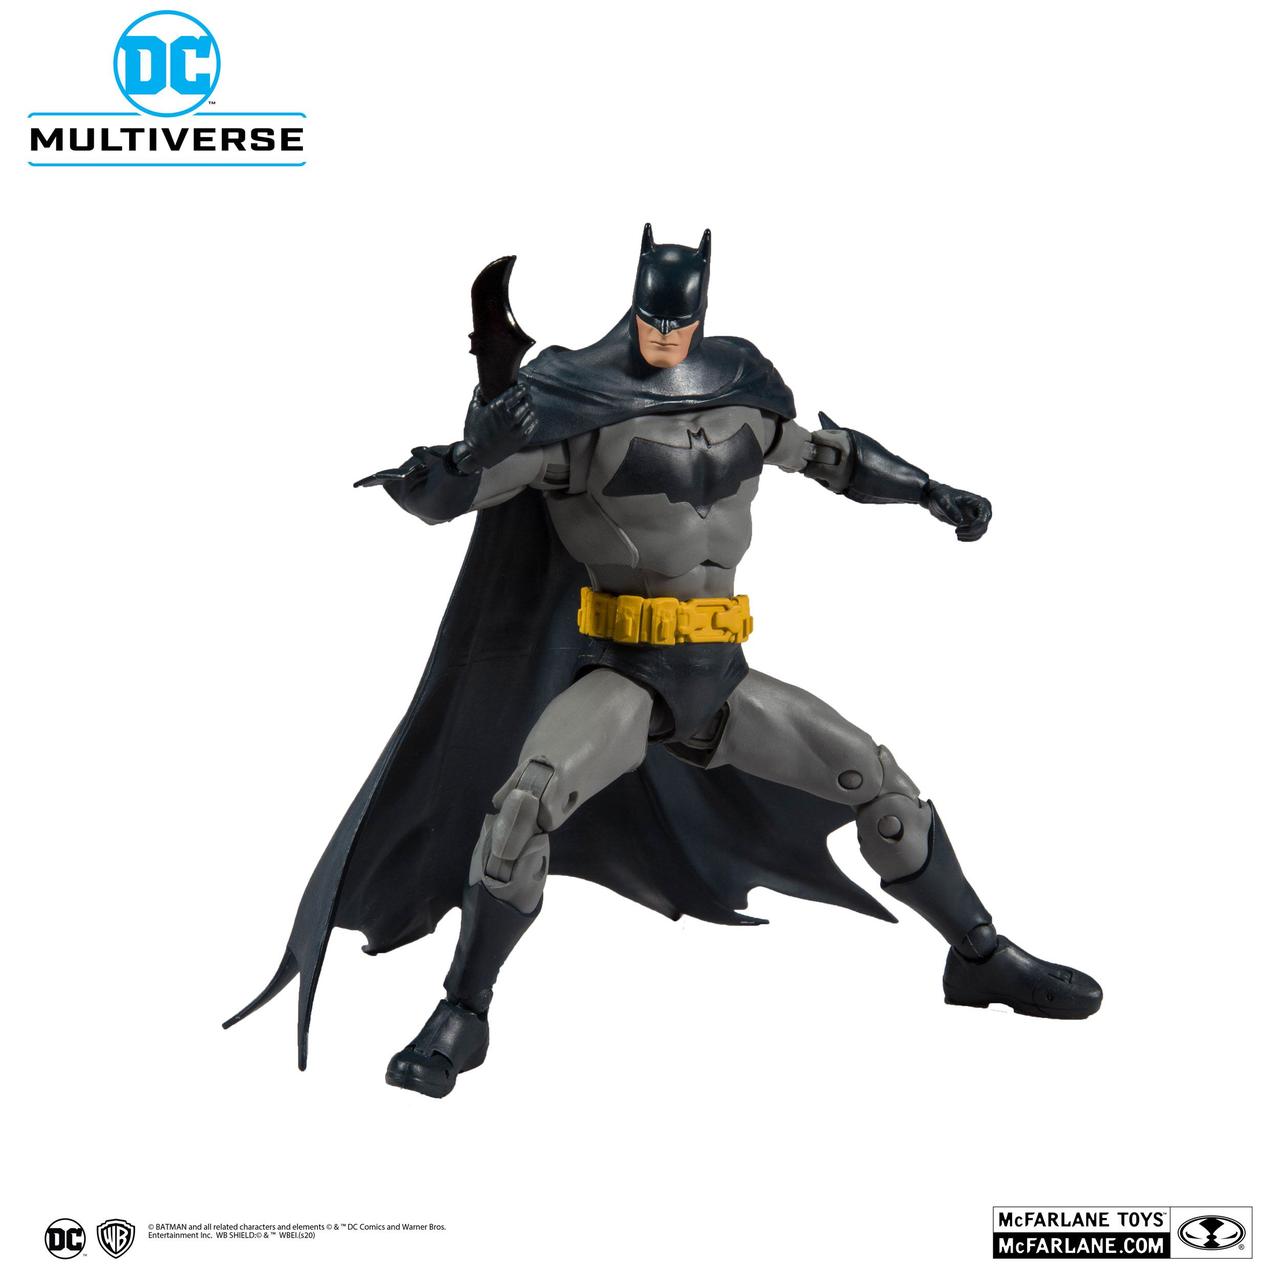 McFarlane "Мультивселенная DC" Фигурка Бэтмена Detective Comics #1000